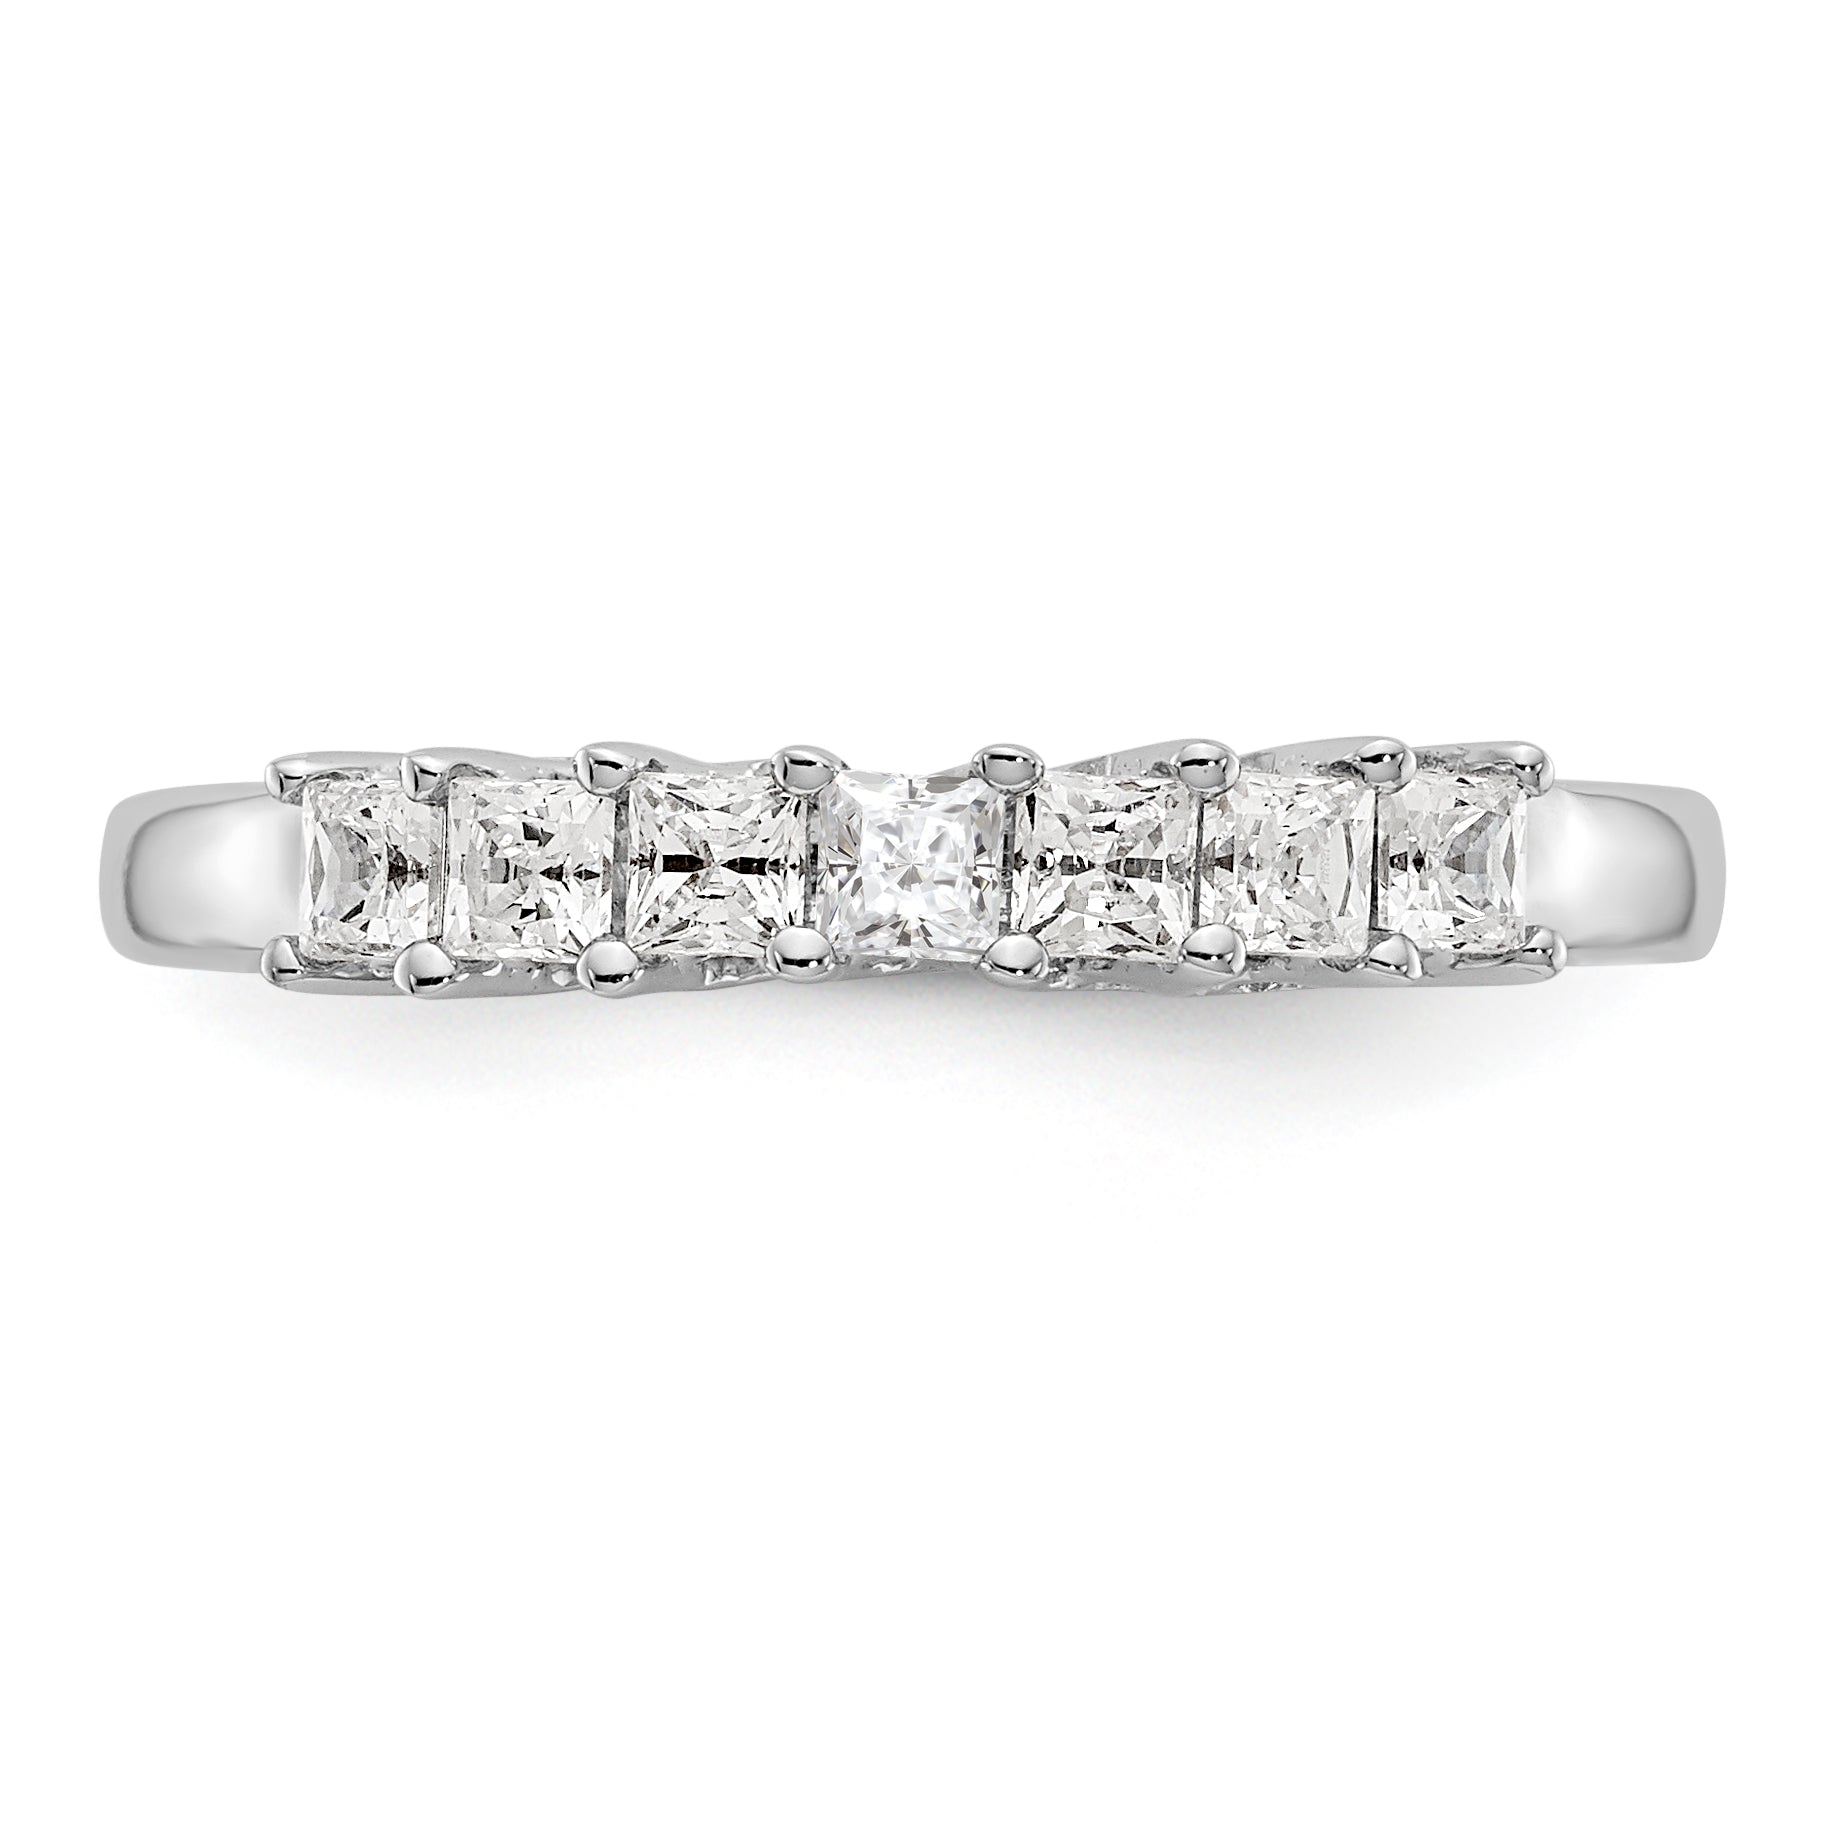 14K White Gold 7-Stone Shared Prong 1/2 carat Complete Princess Diamond Band